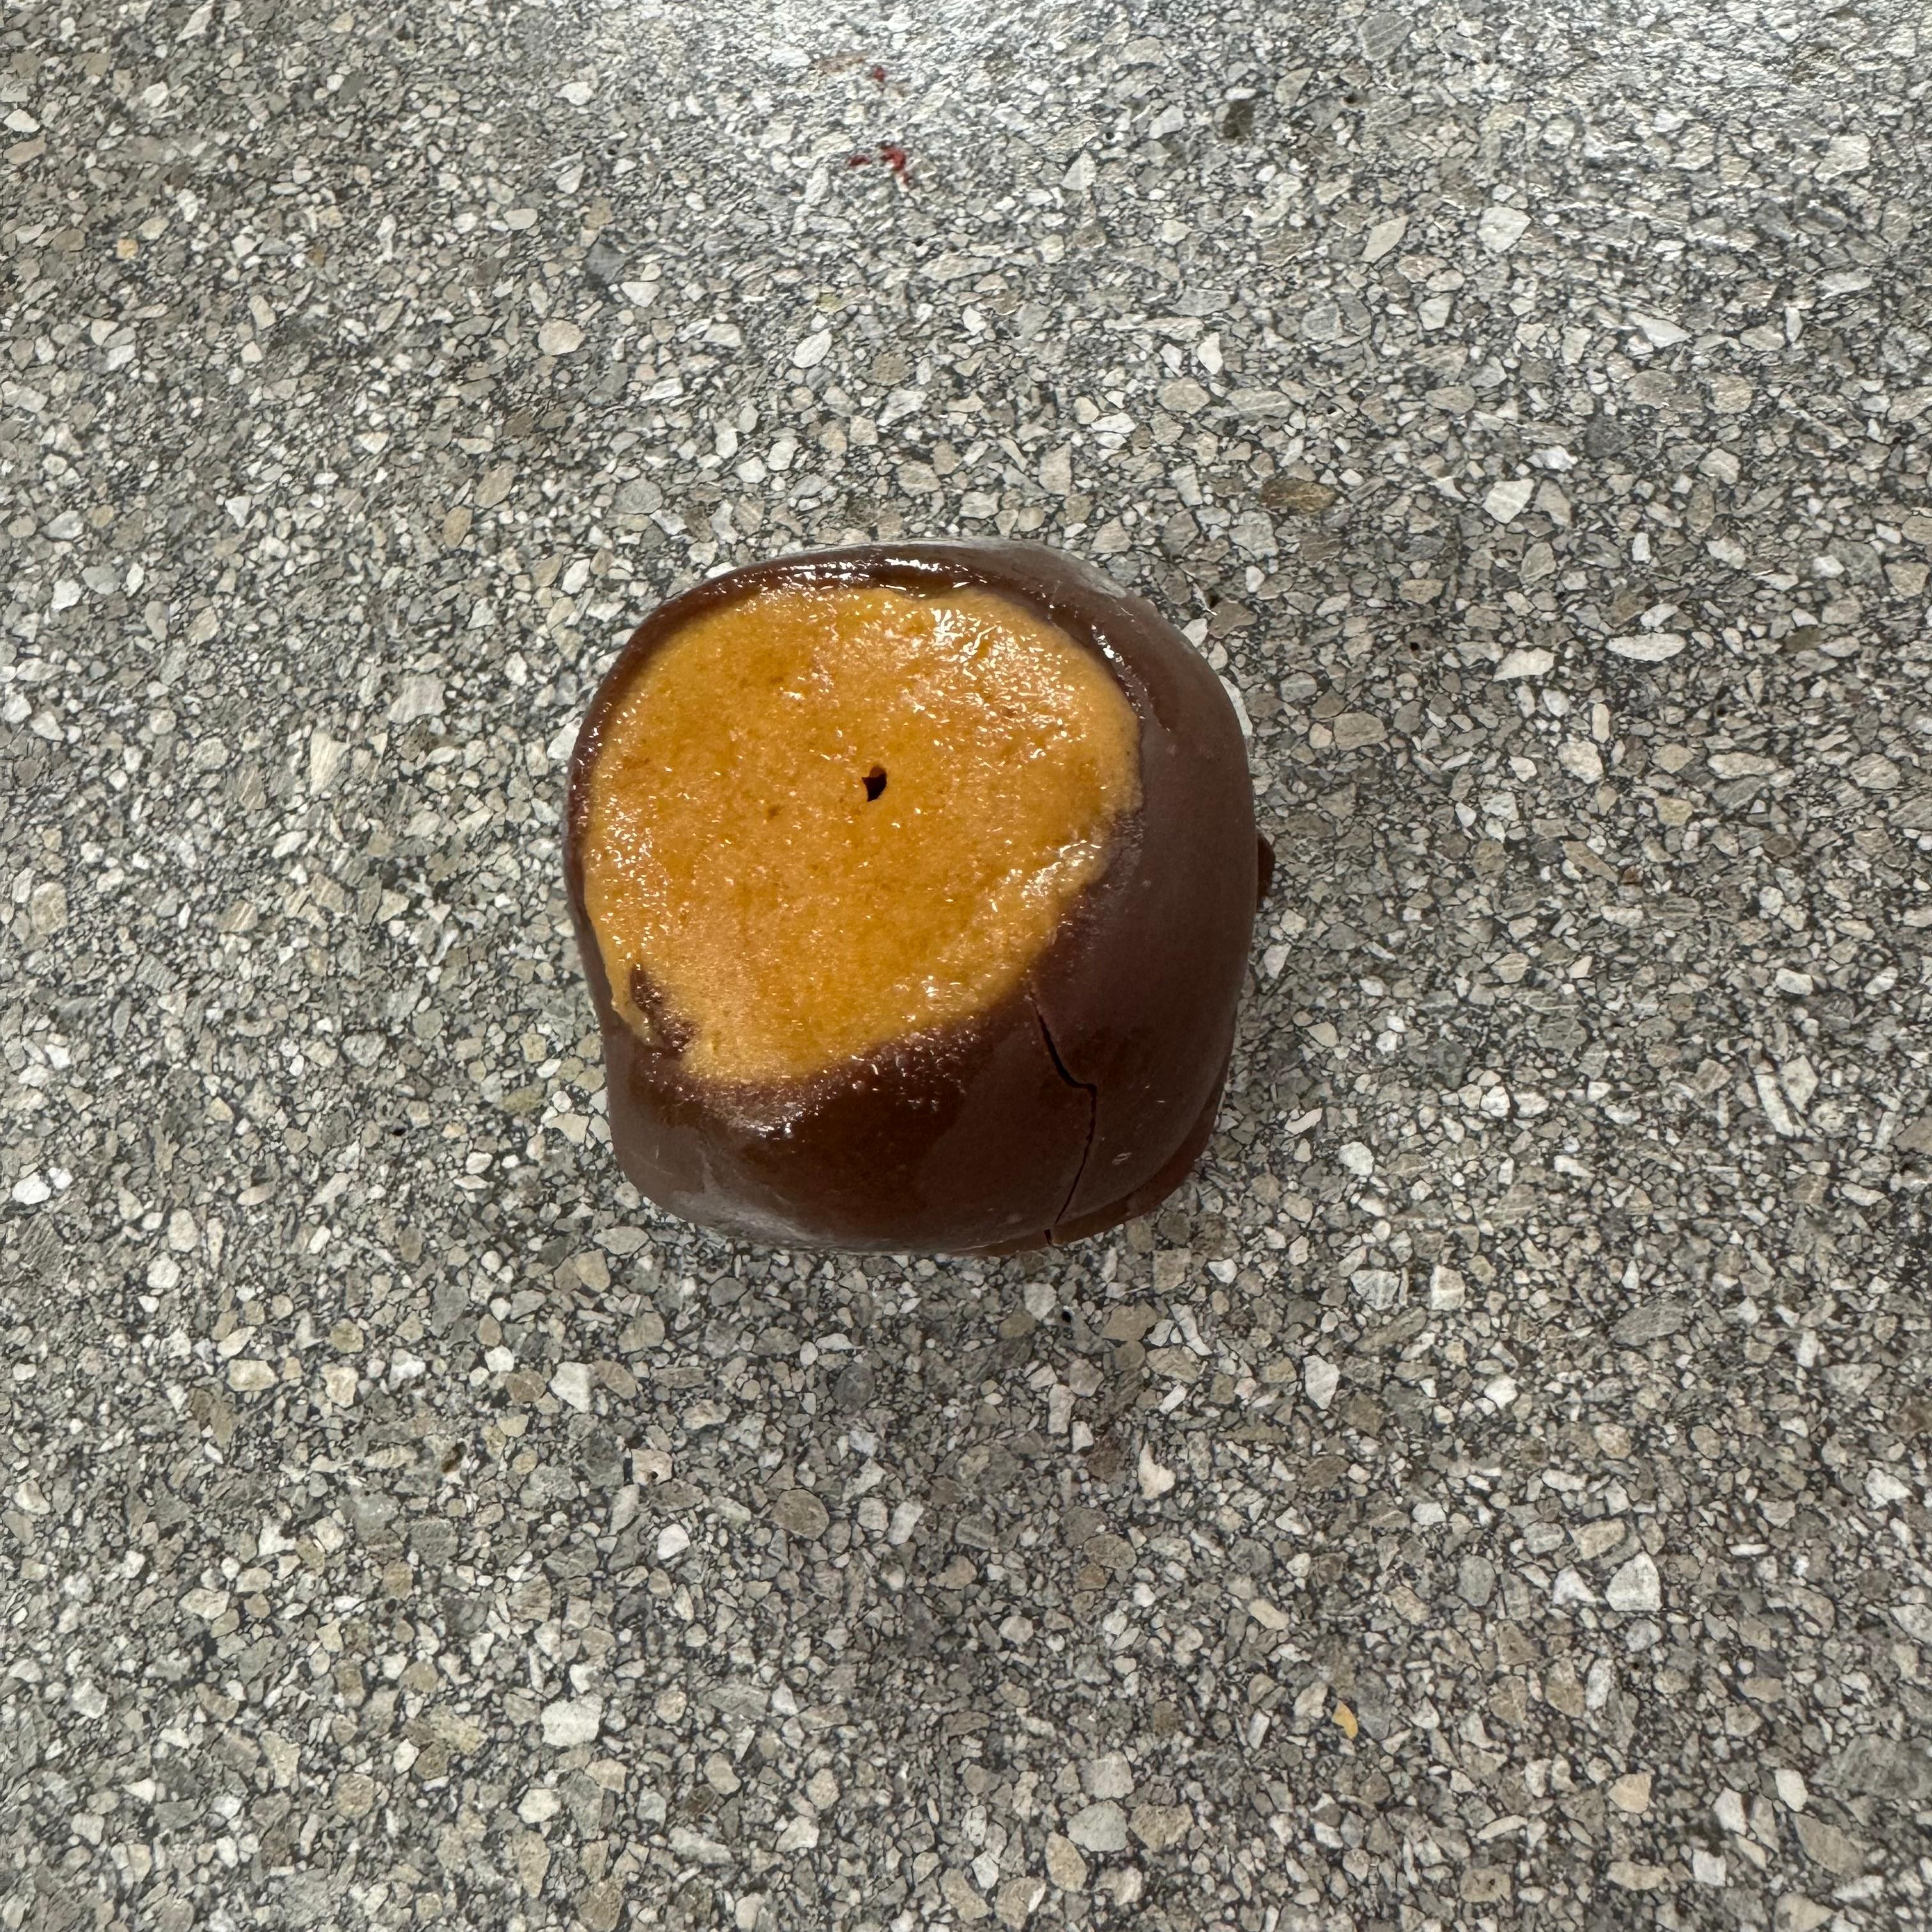 SF Brownies with nuts